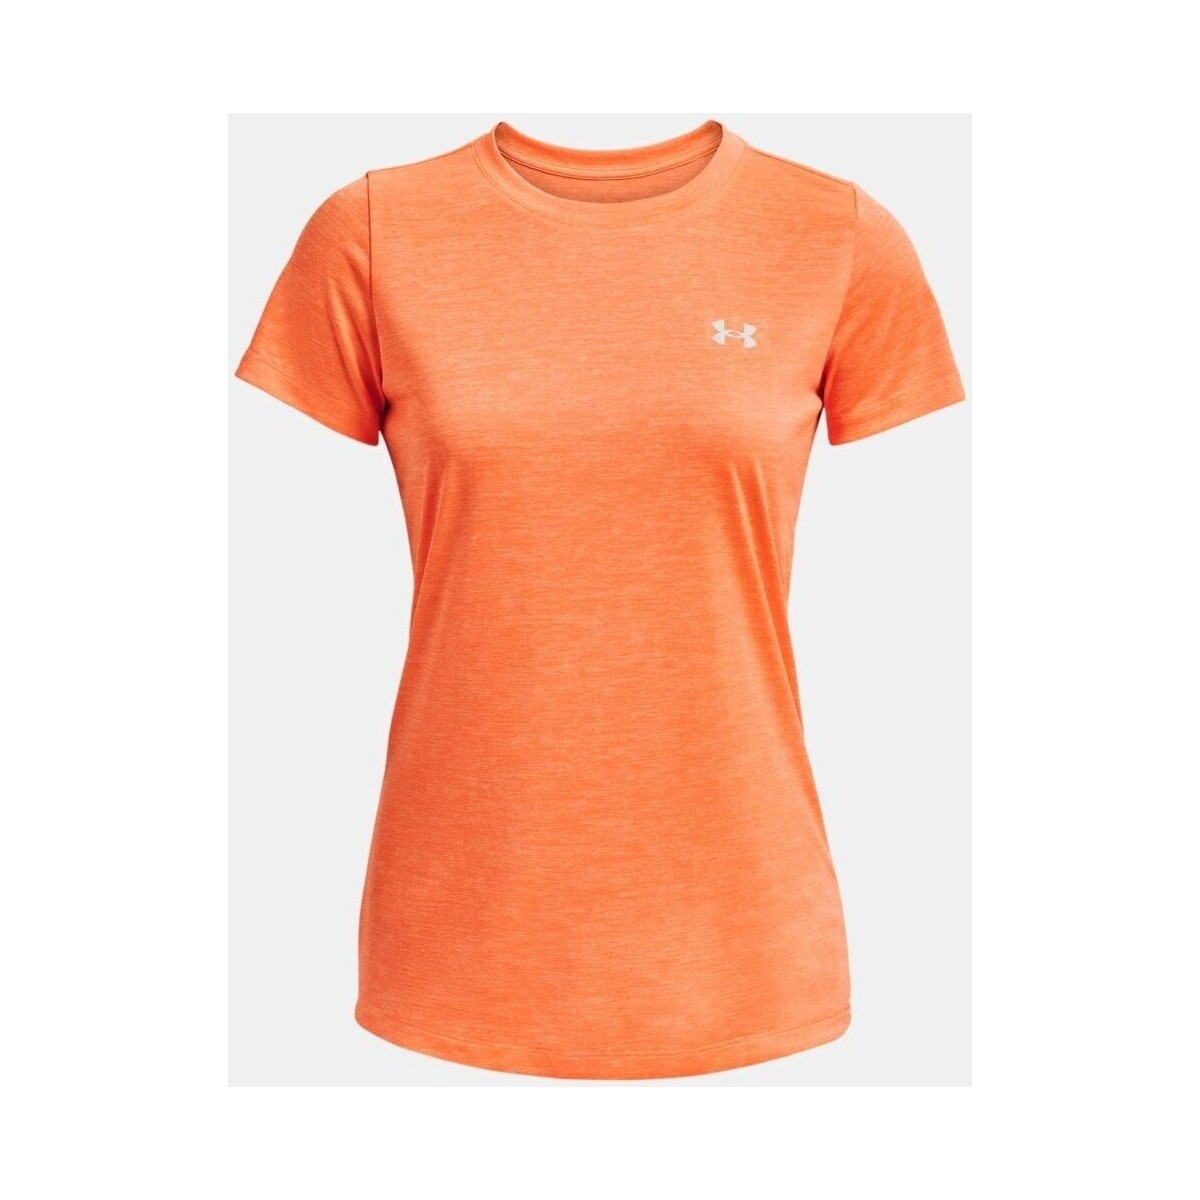 Abbigliamento Donna T-shirt maniche corte Under Armour T-Shirt Donna Tech Twist Arancio